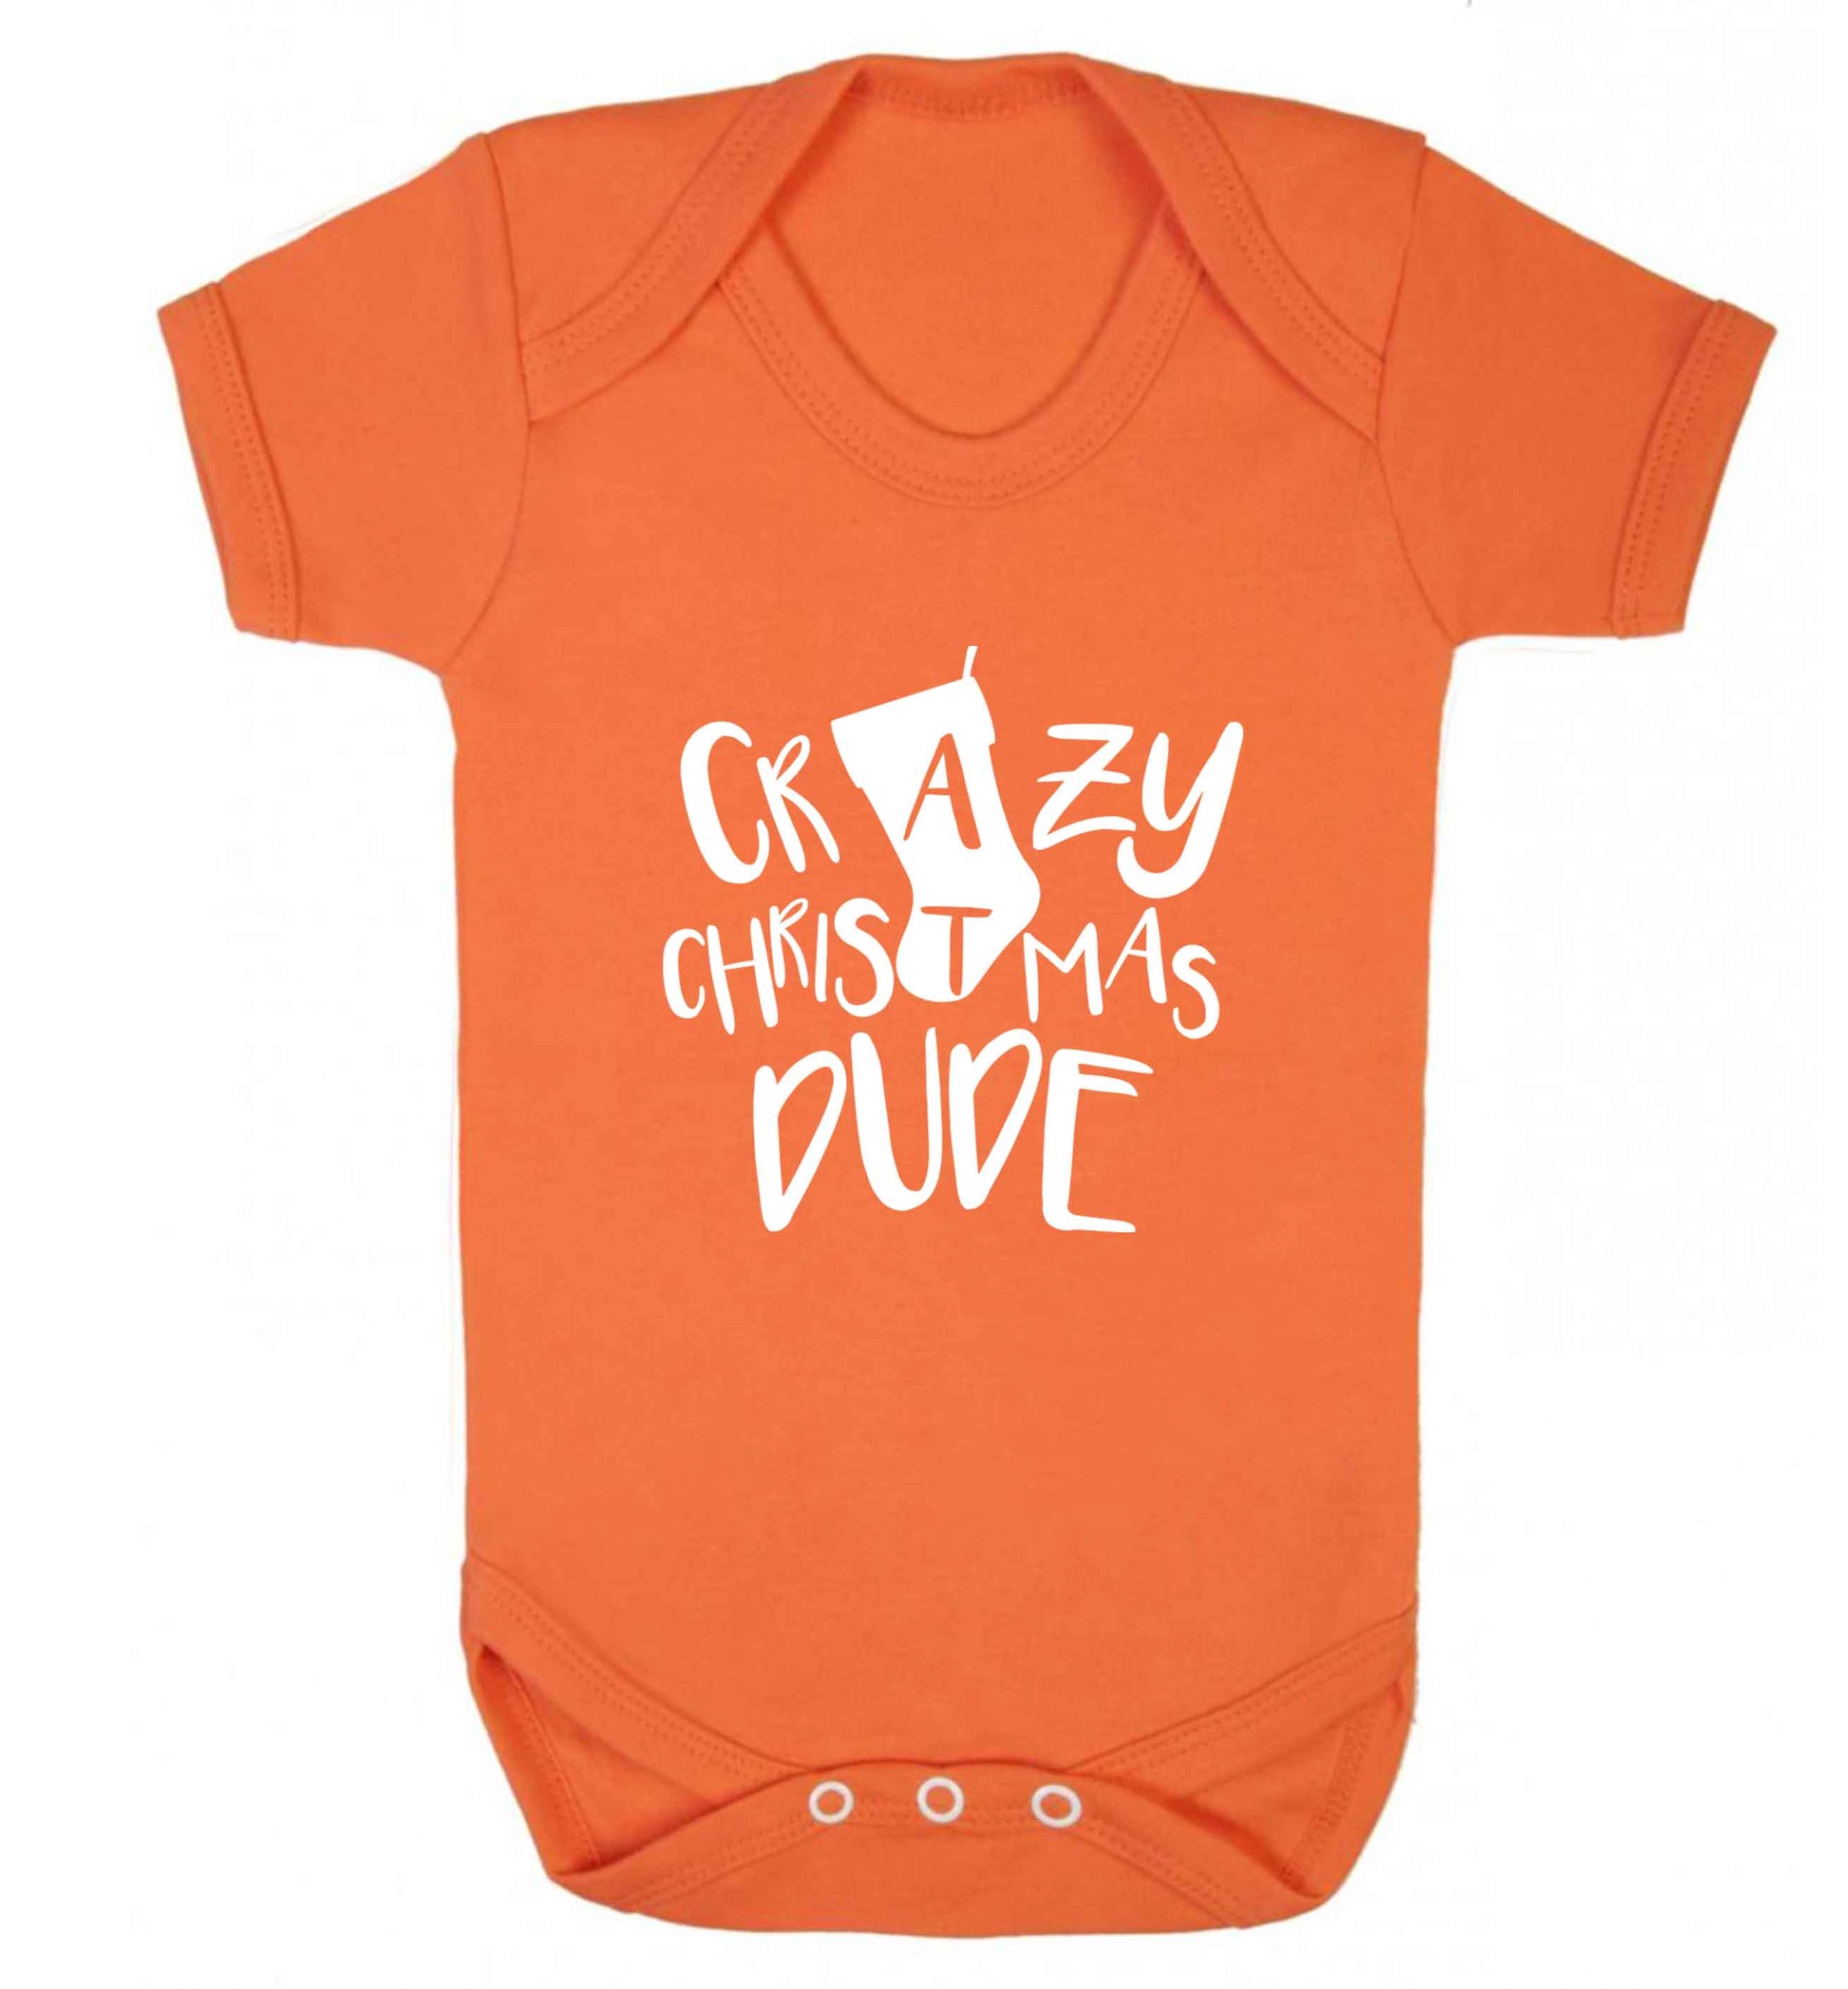 Crazy Christmas Dude baby vest orange 18-24 months